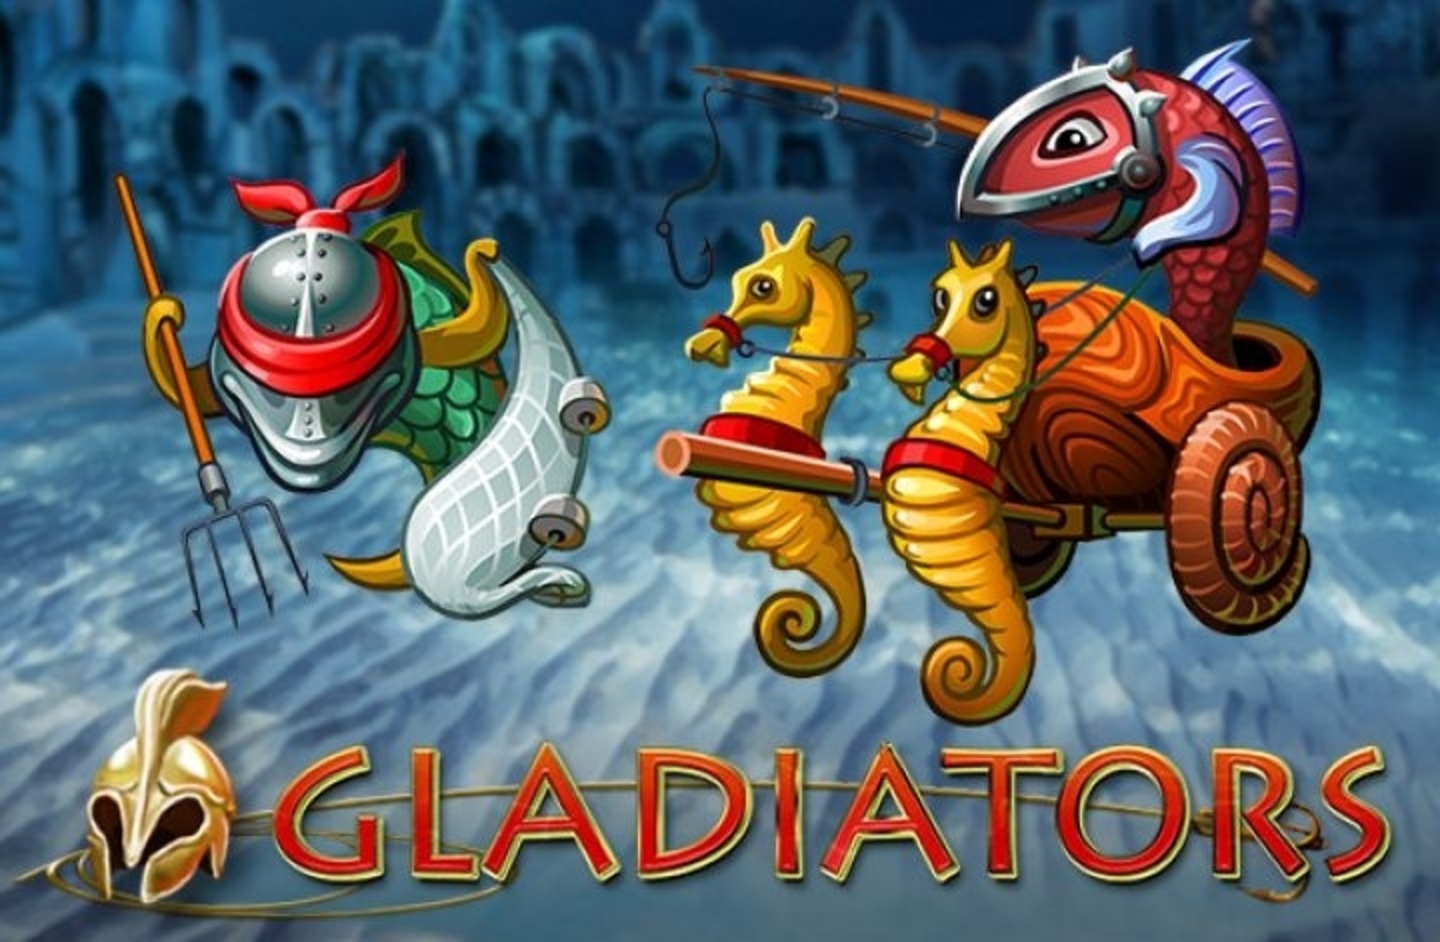 Gladiators demo